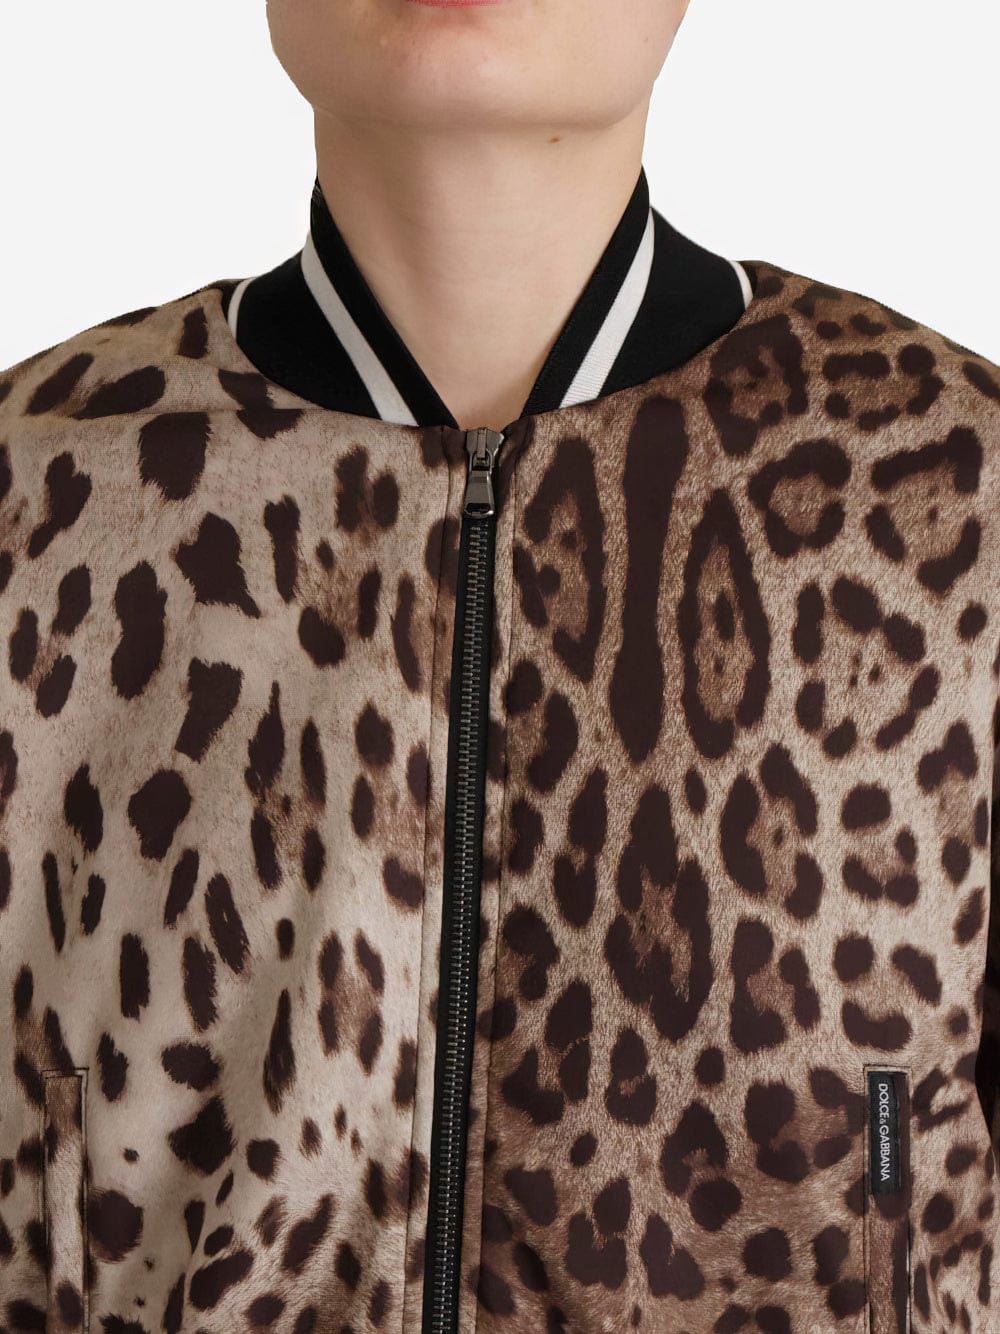 Dolce & Gabbana Leopard Print Bomber Jacket